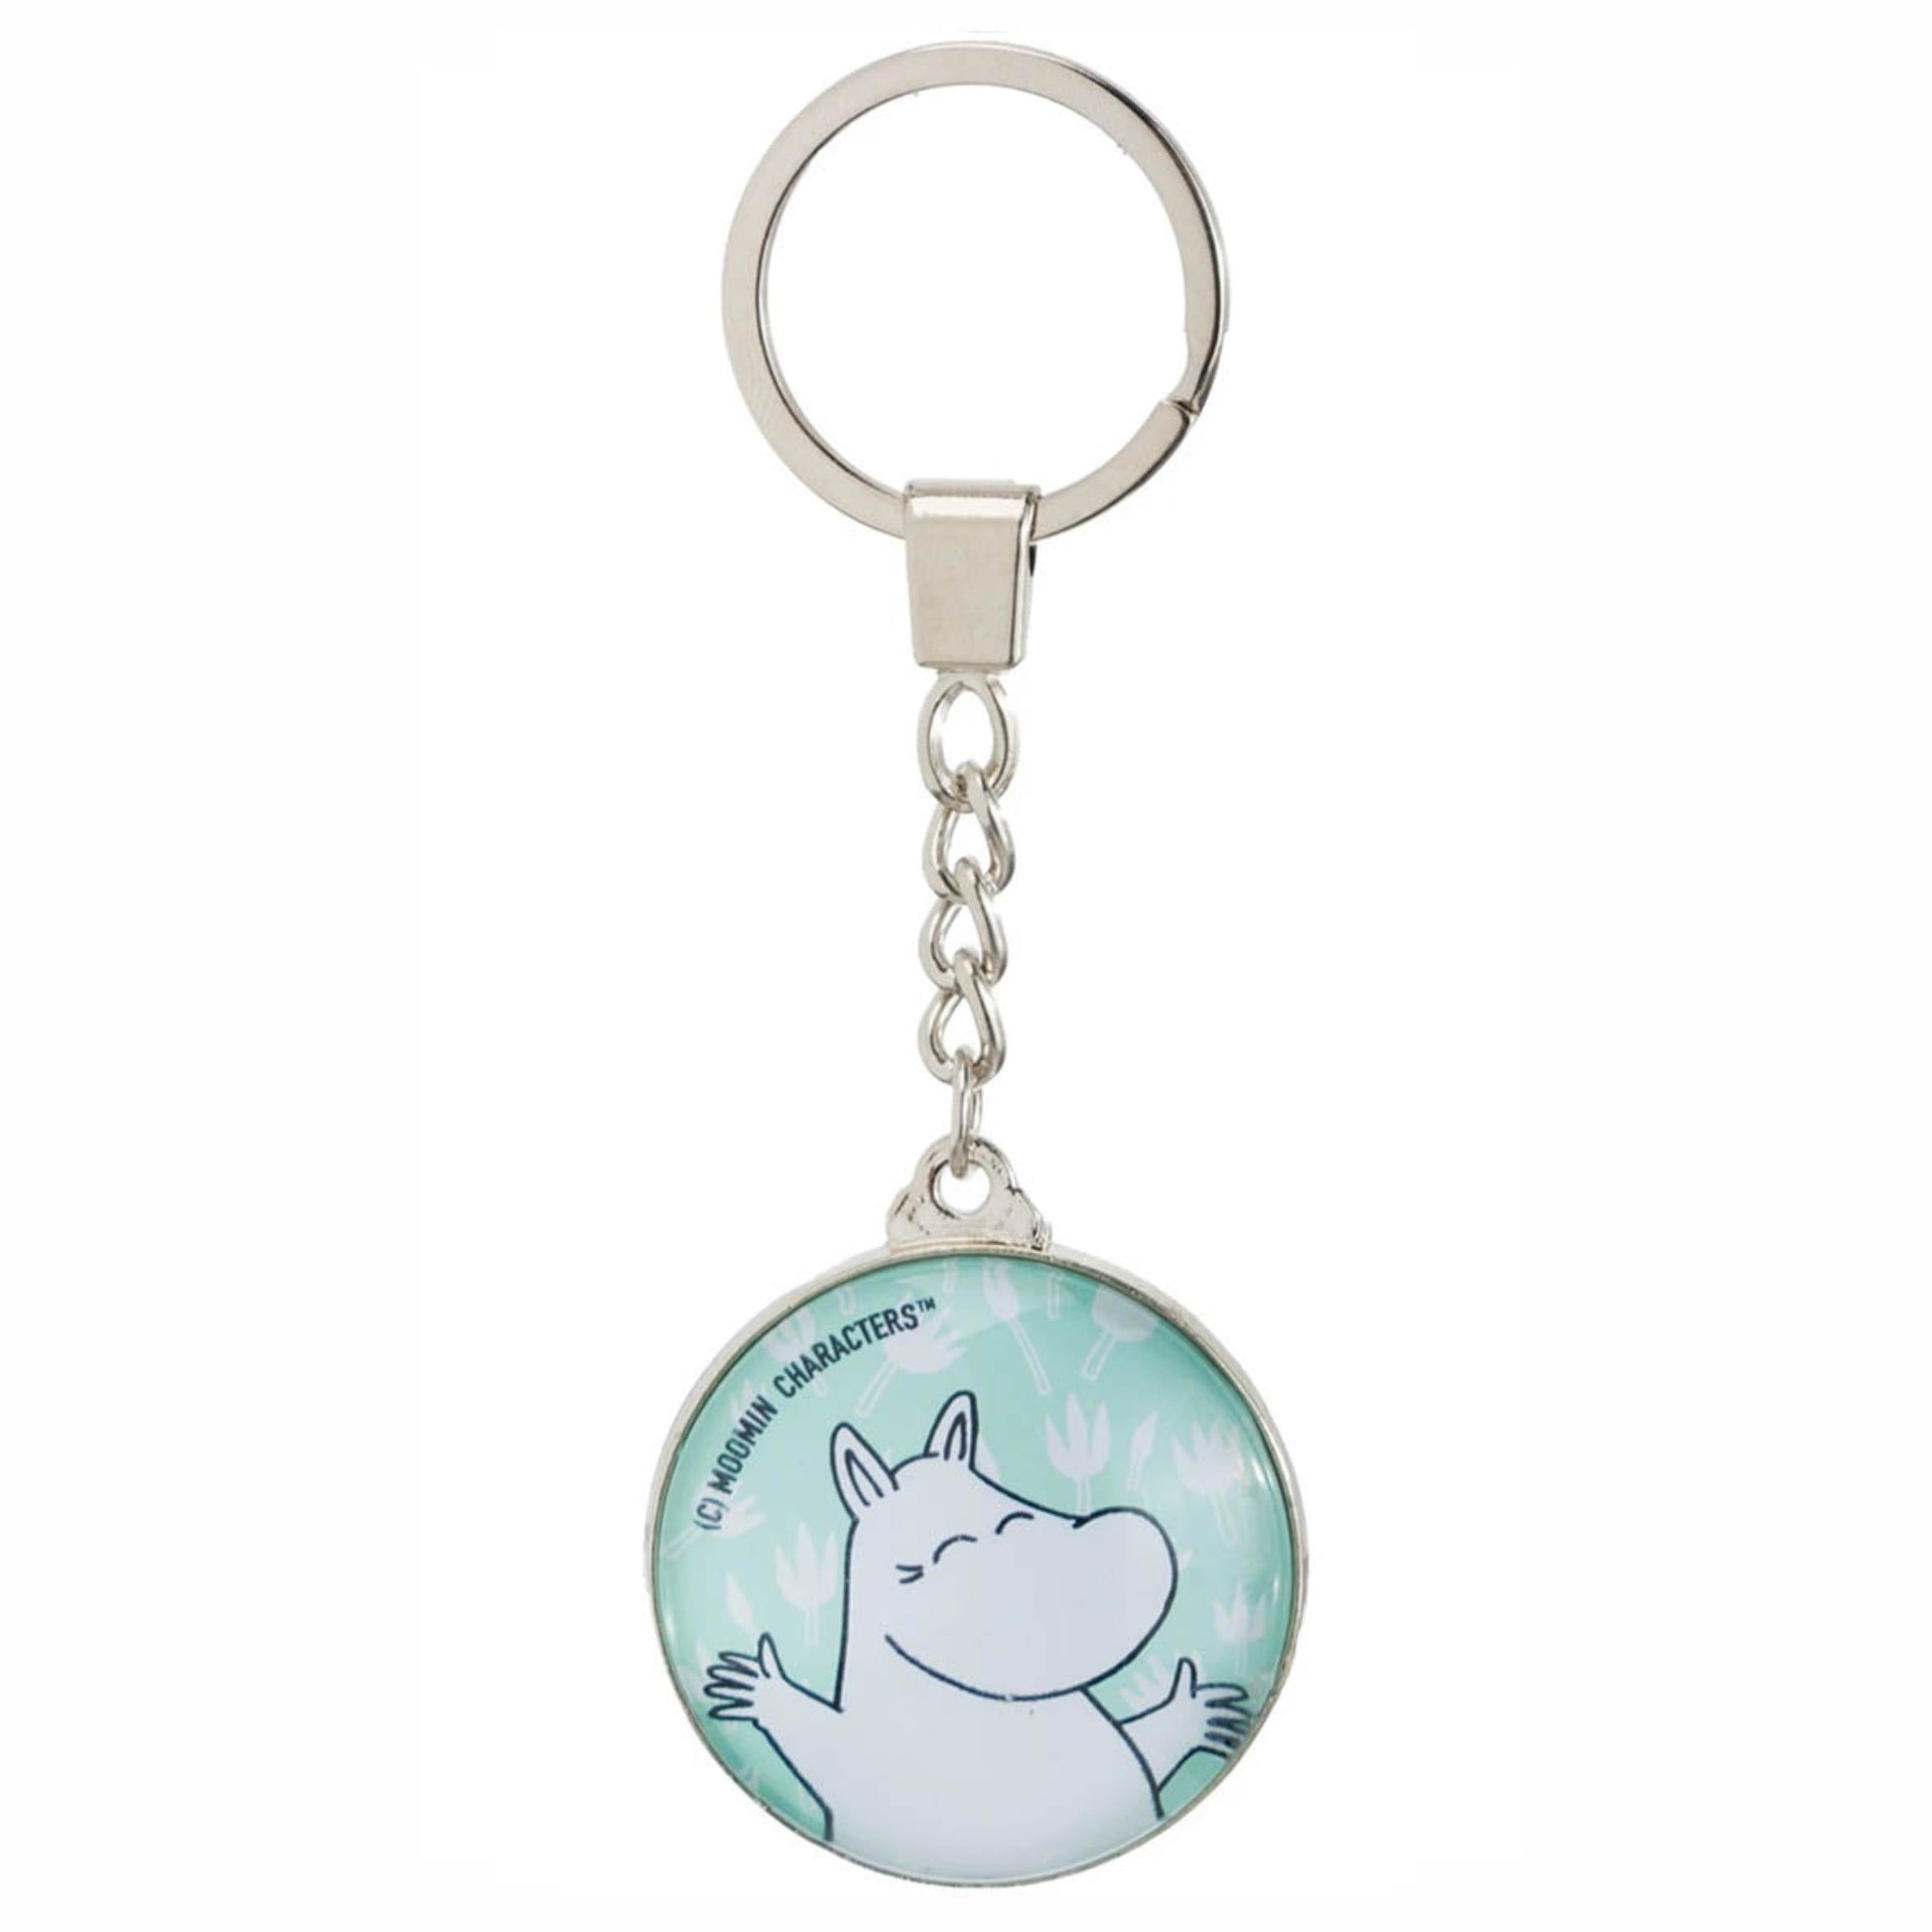 Moomin Key Ring, Moomintroll (6631580794945)